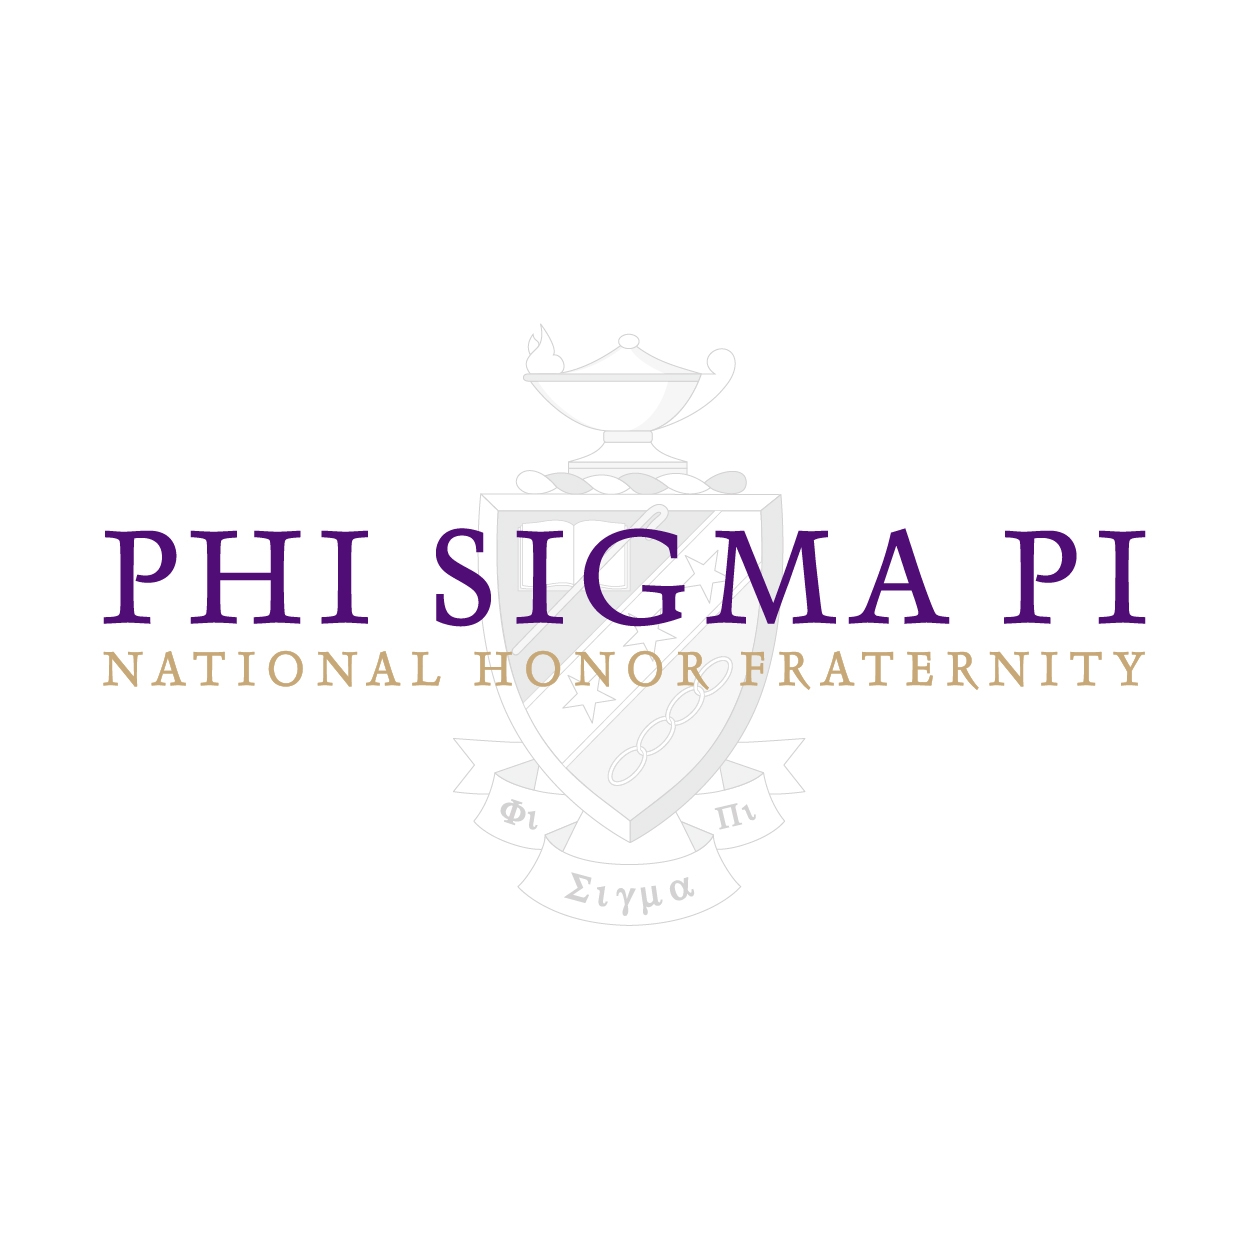 Phi Sigma Pi